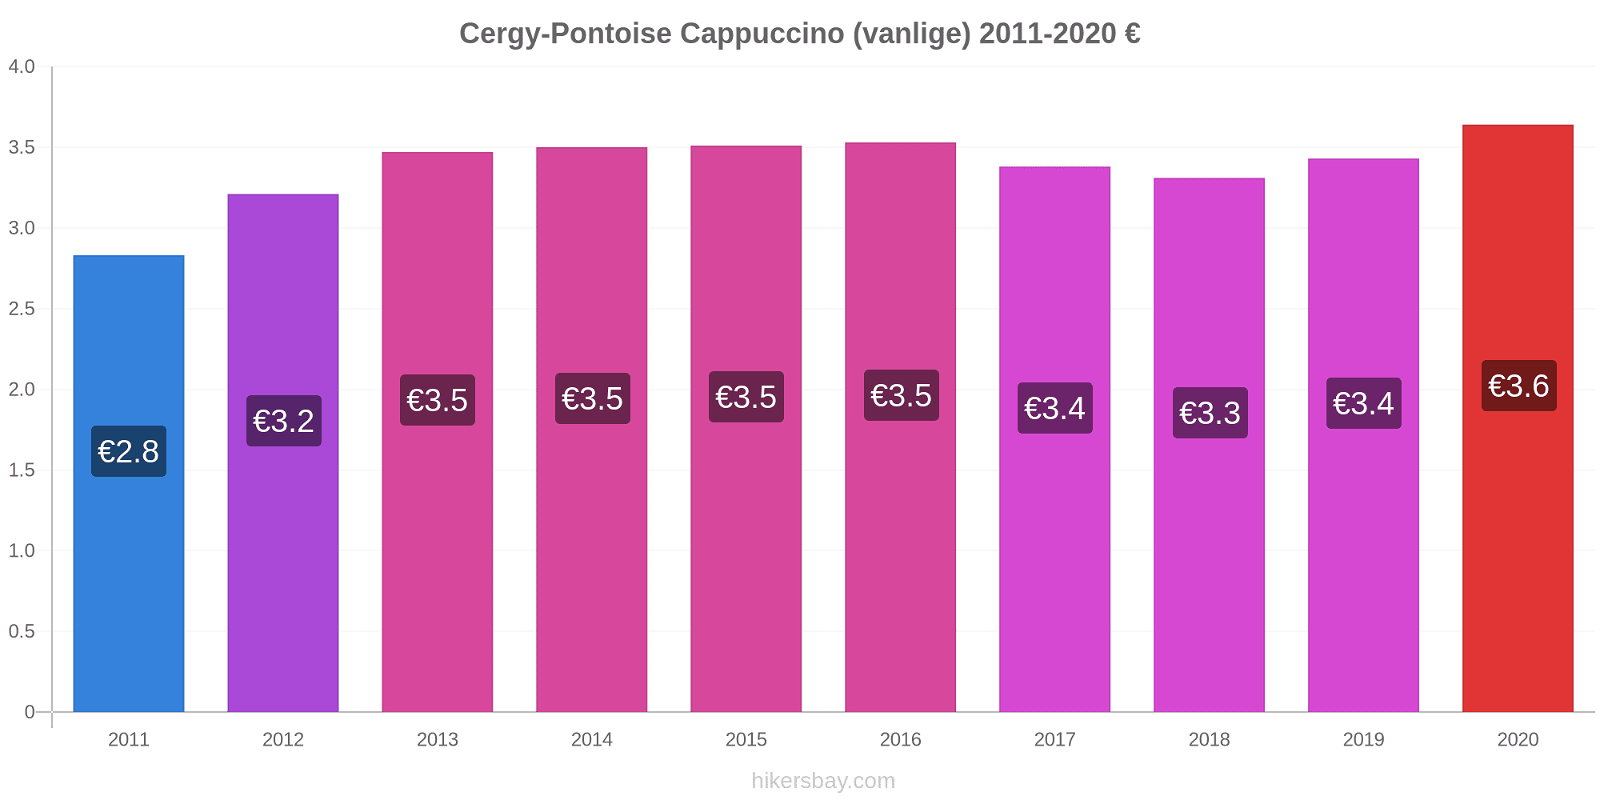 Cergy-Pontoise prisendringer Cappuccino (vanlige) hikersbay.com